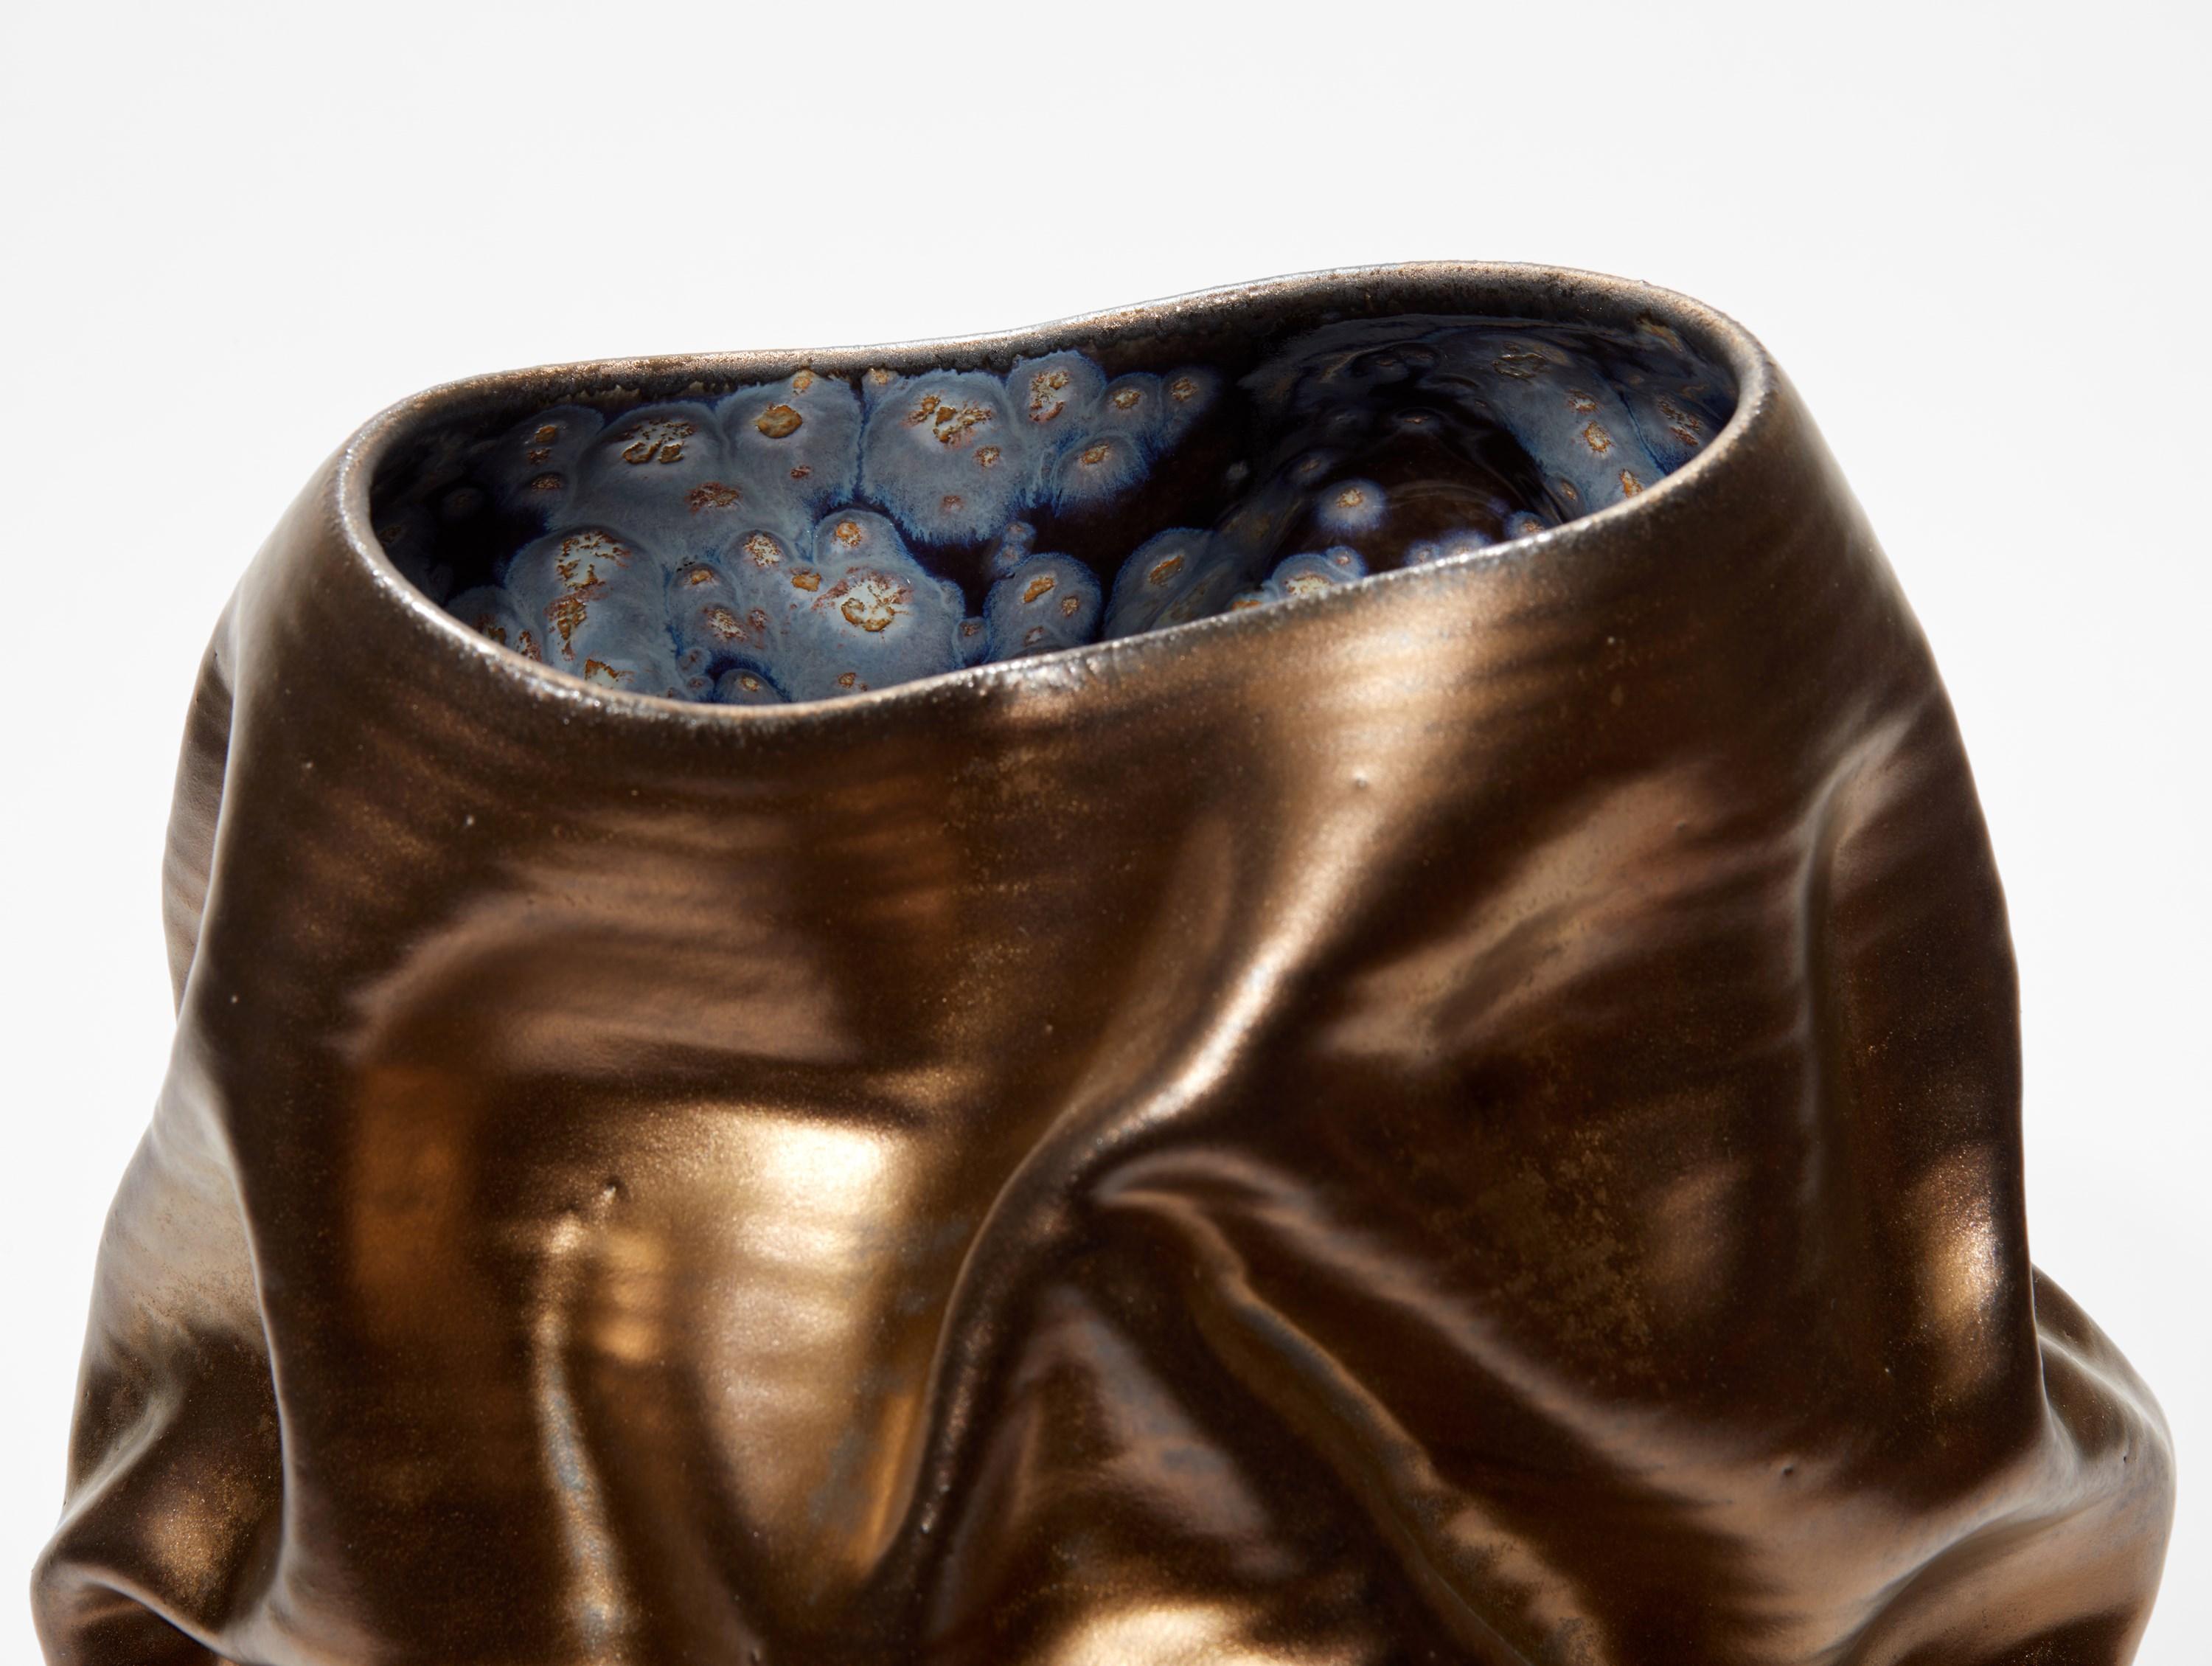 Contemporary Tall Gold Crumpled Form No 96, a Ceramic Vessel by Nicholas Arroyave-Portela